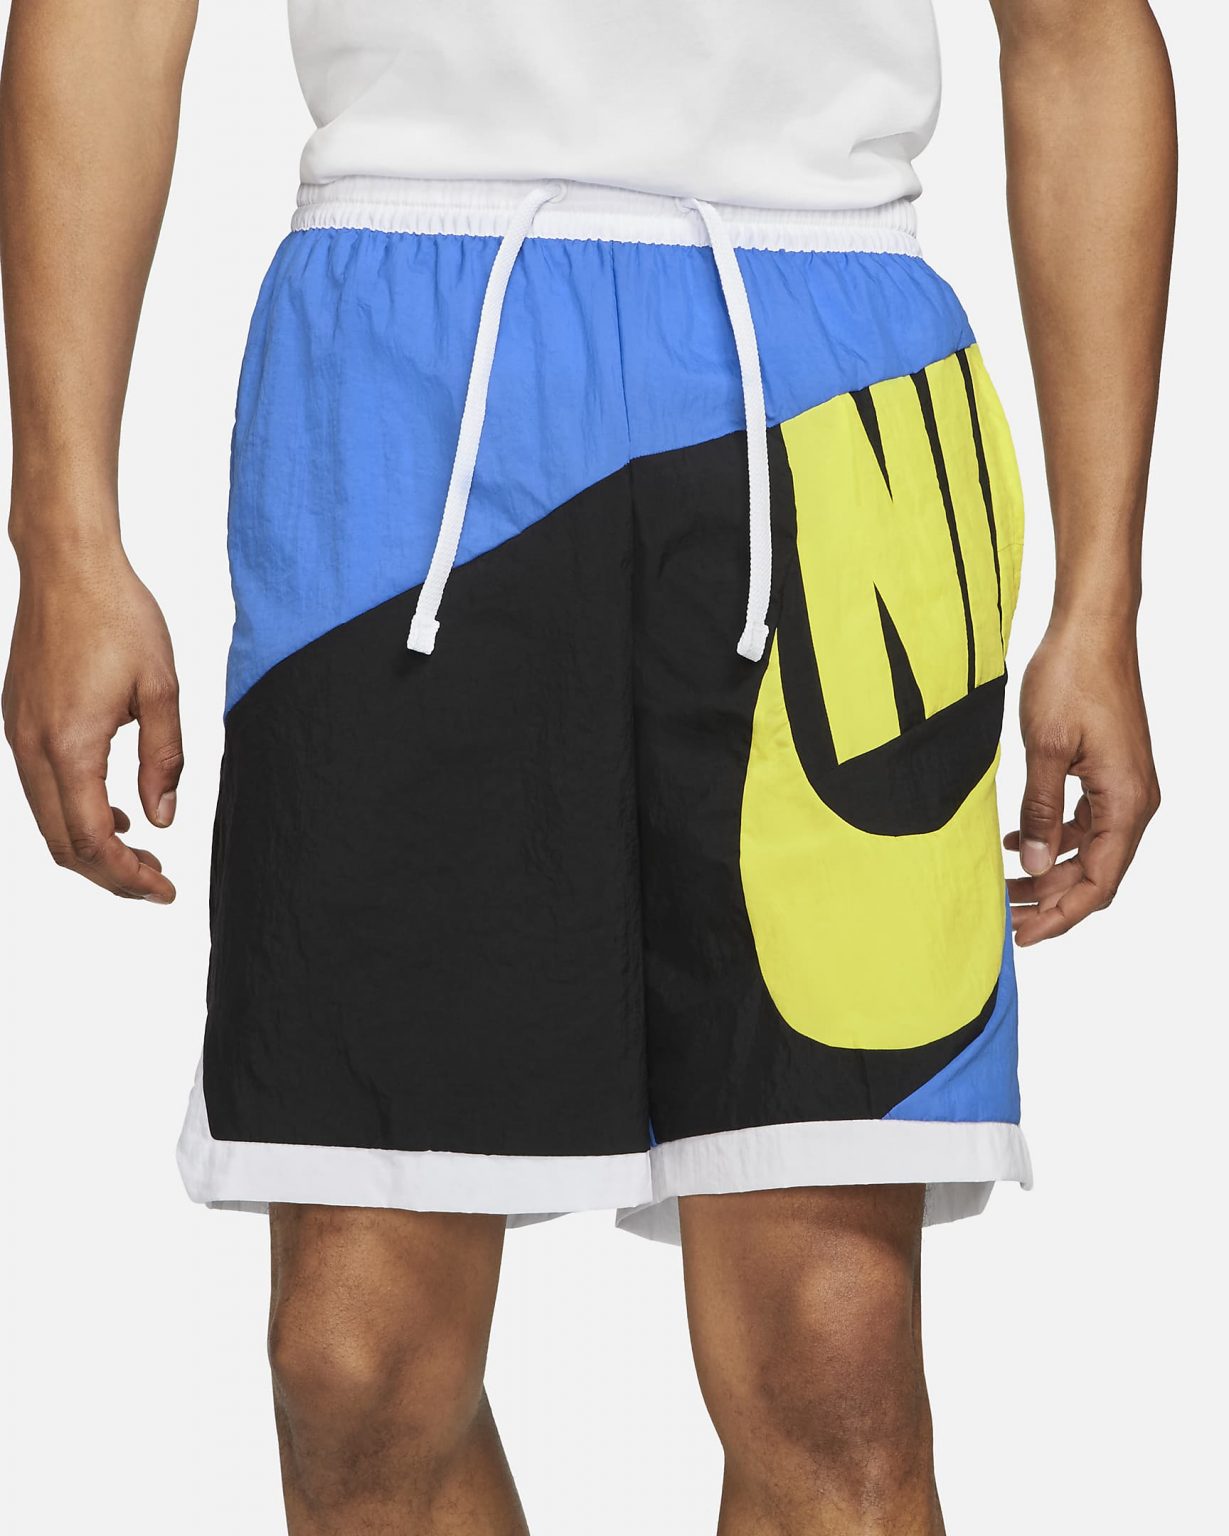 Nike Air Griffey Max 1 Varsity Royal Shirts Outfits to Match